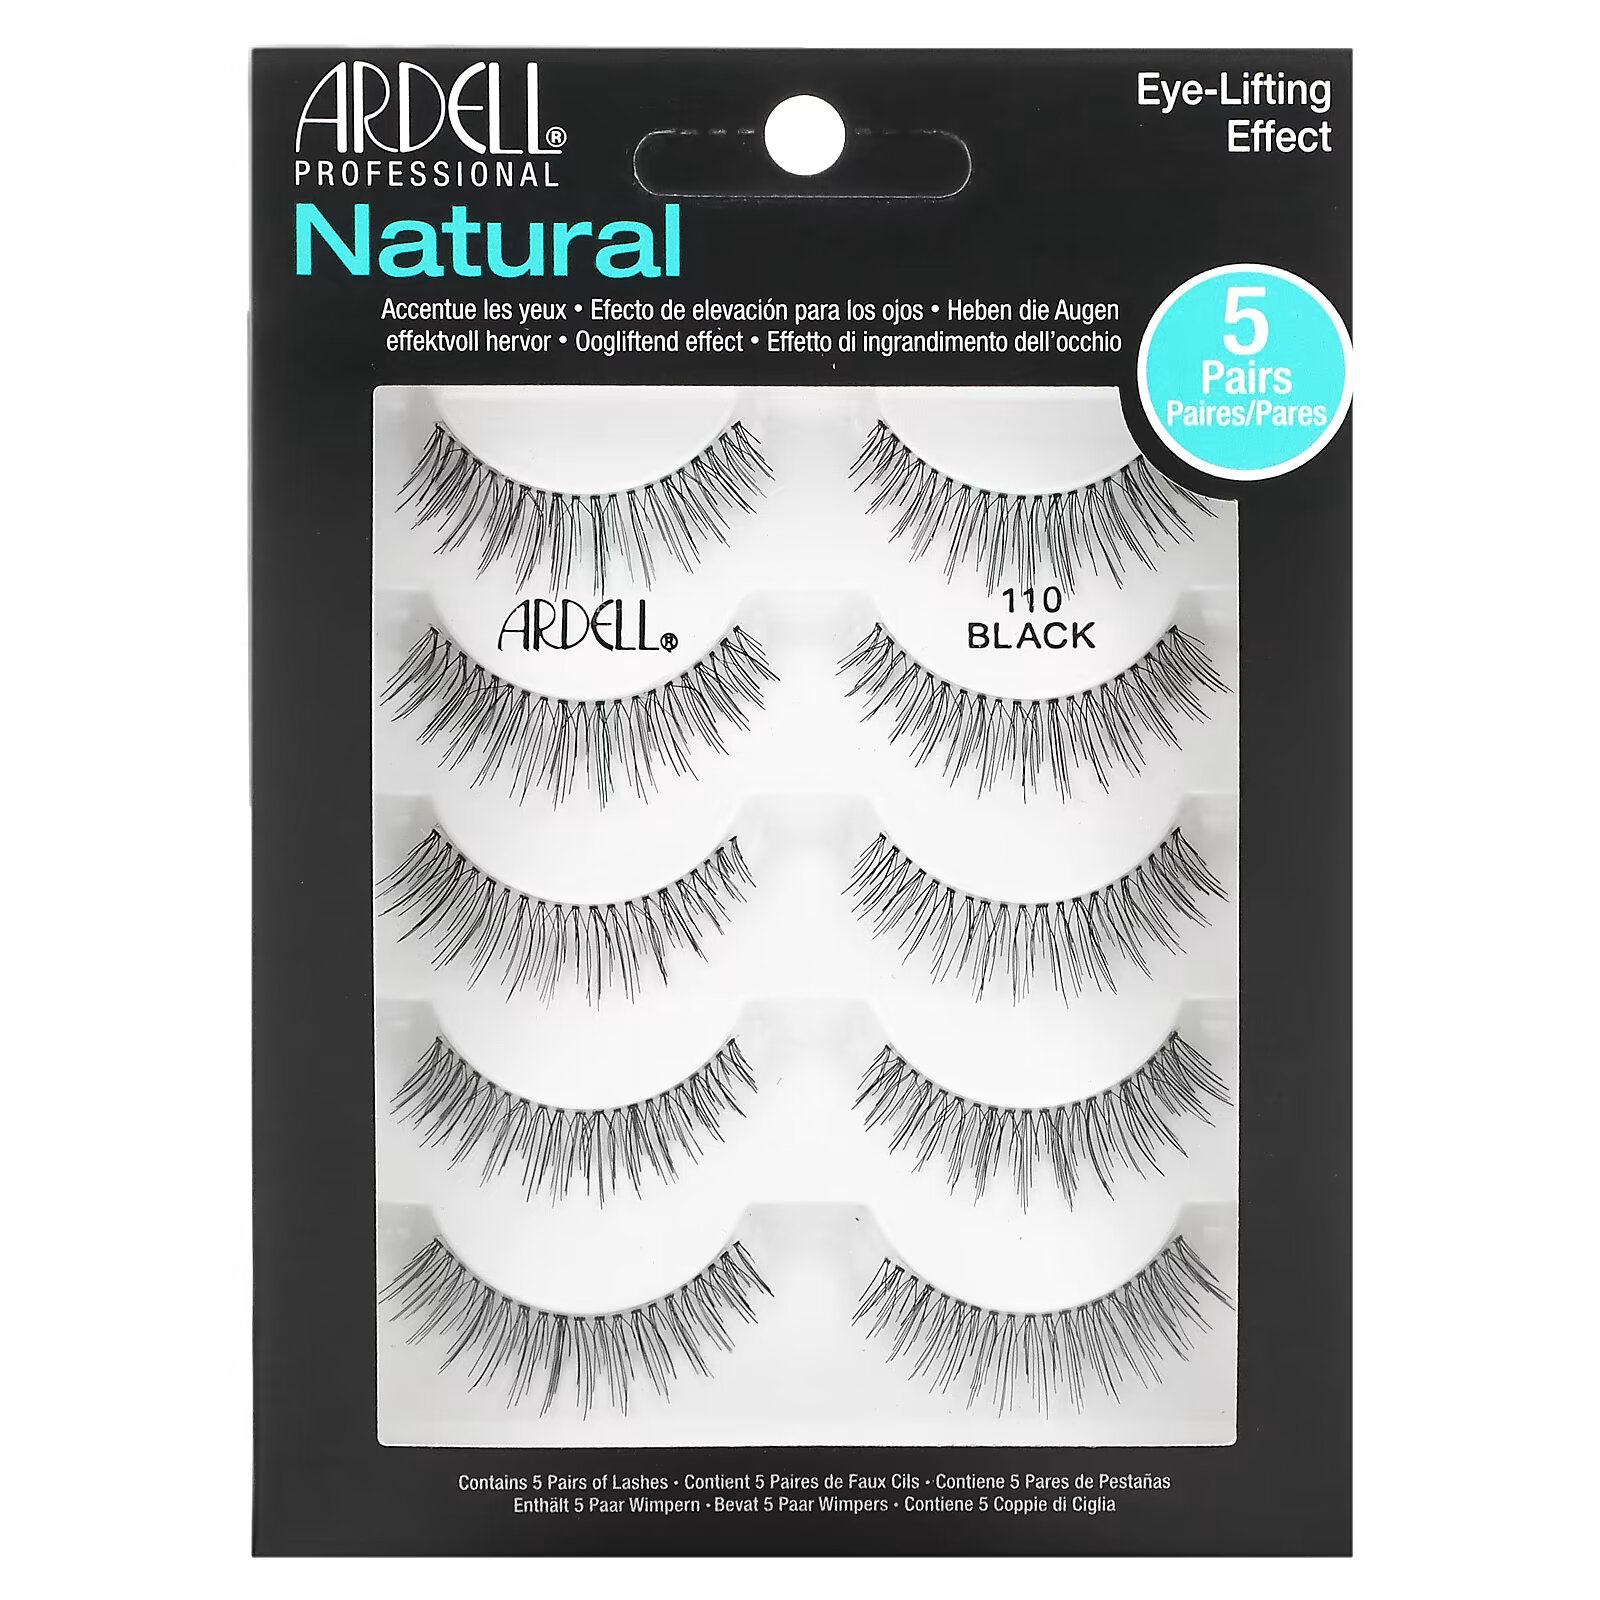 Ardell, Natural Lash, эффект лифтинга глаз, 5 пар ardell natural lash 110 5 pairs